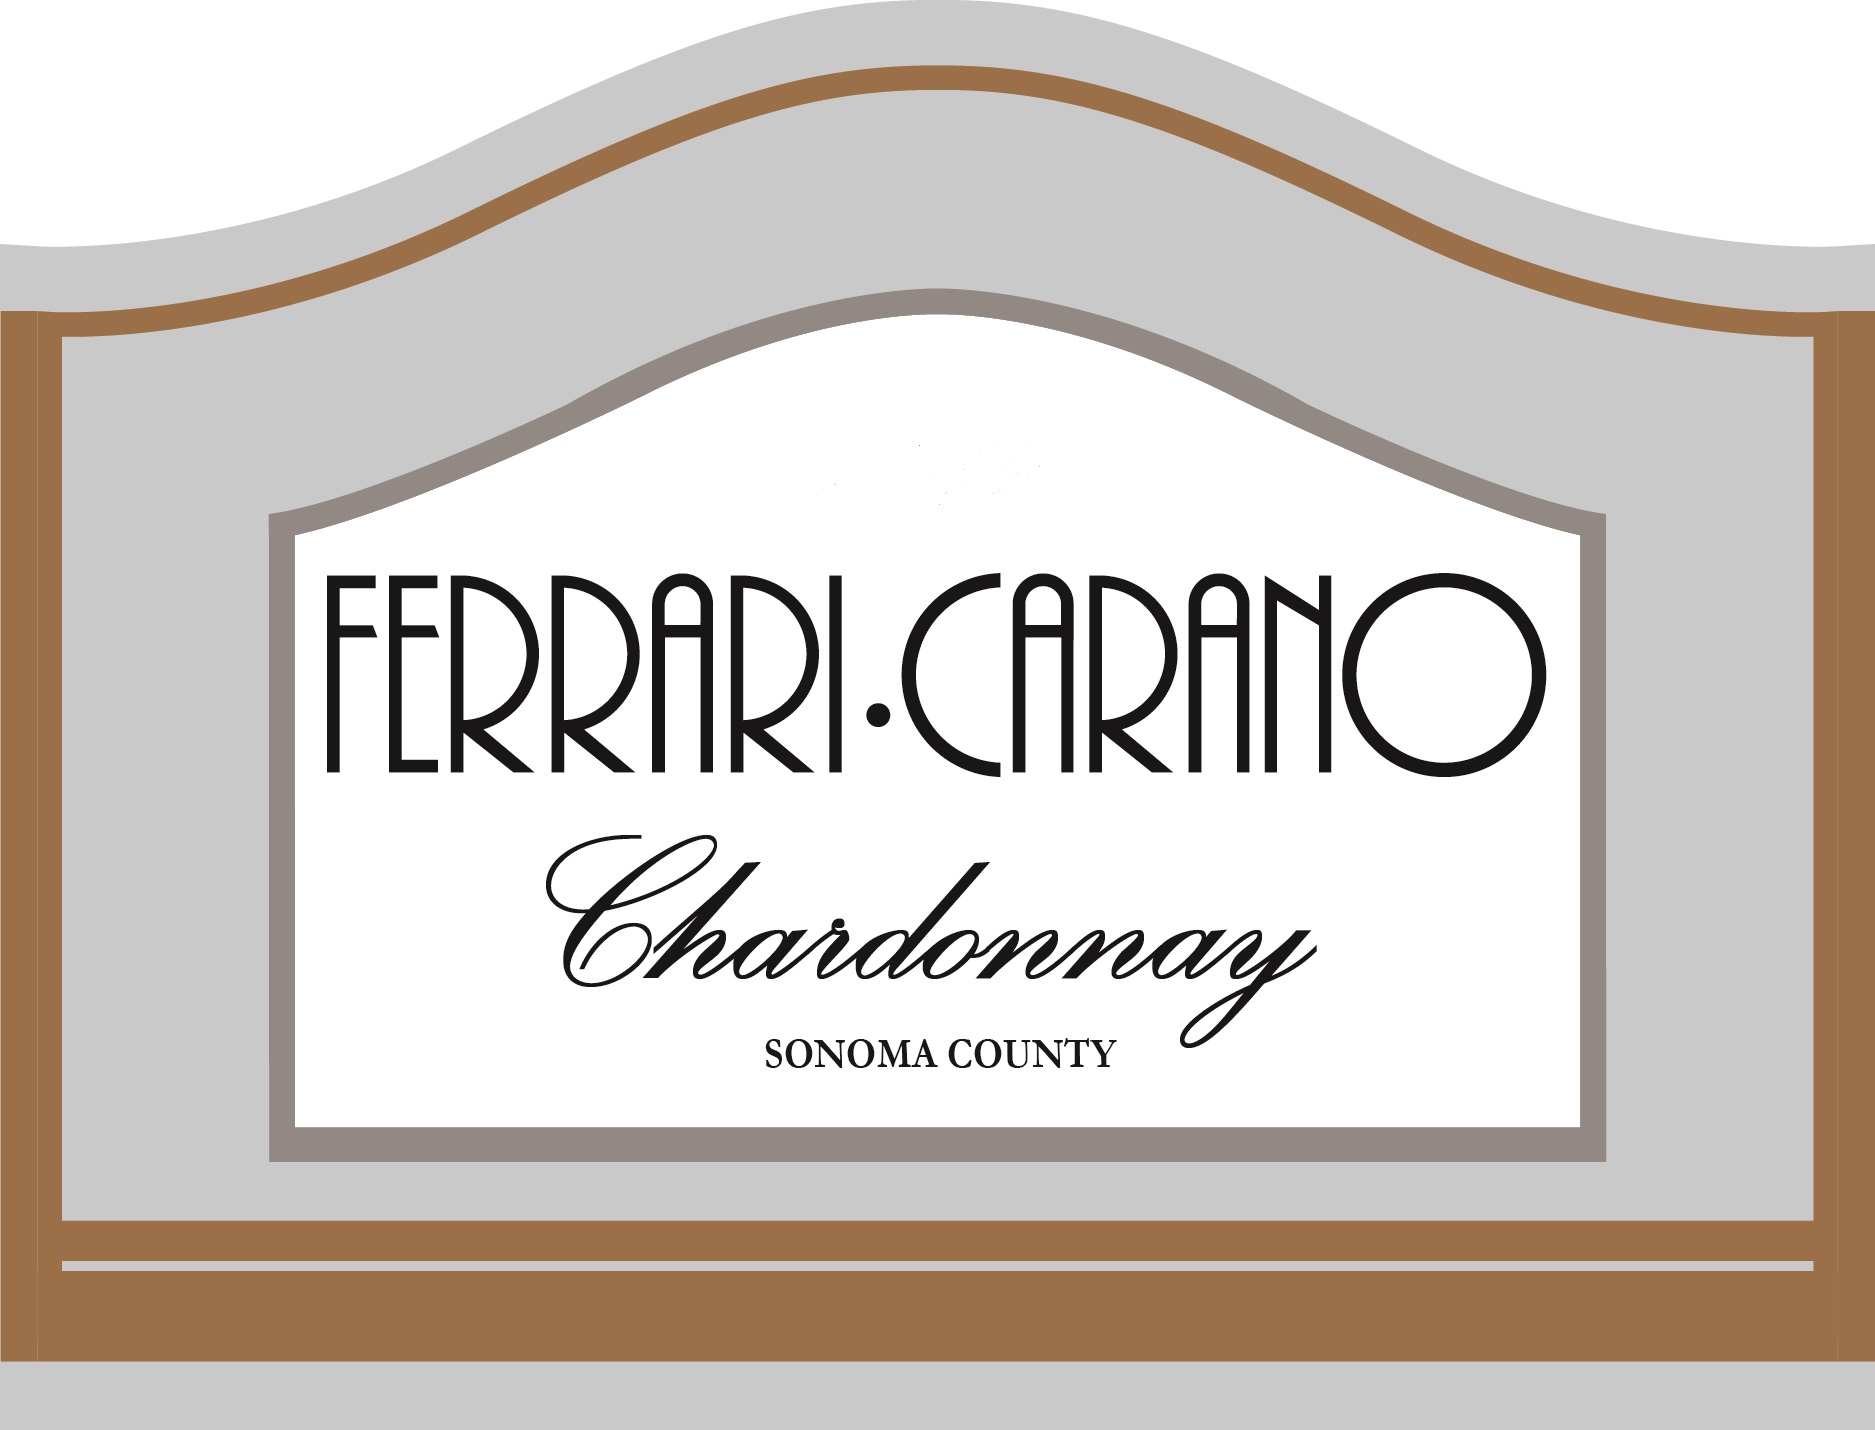 2022 Ferrari Carano Chardonnay Sonoma image